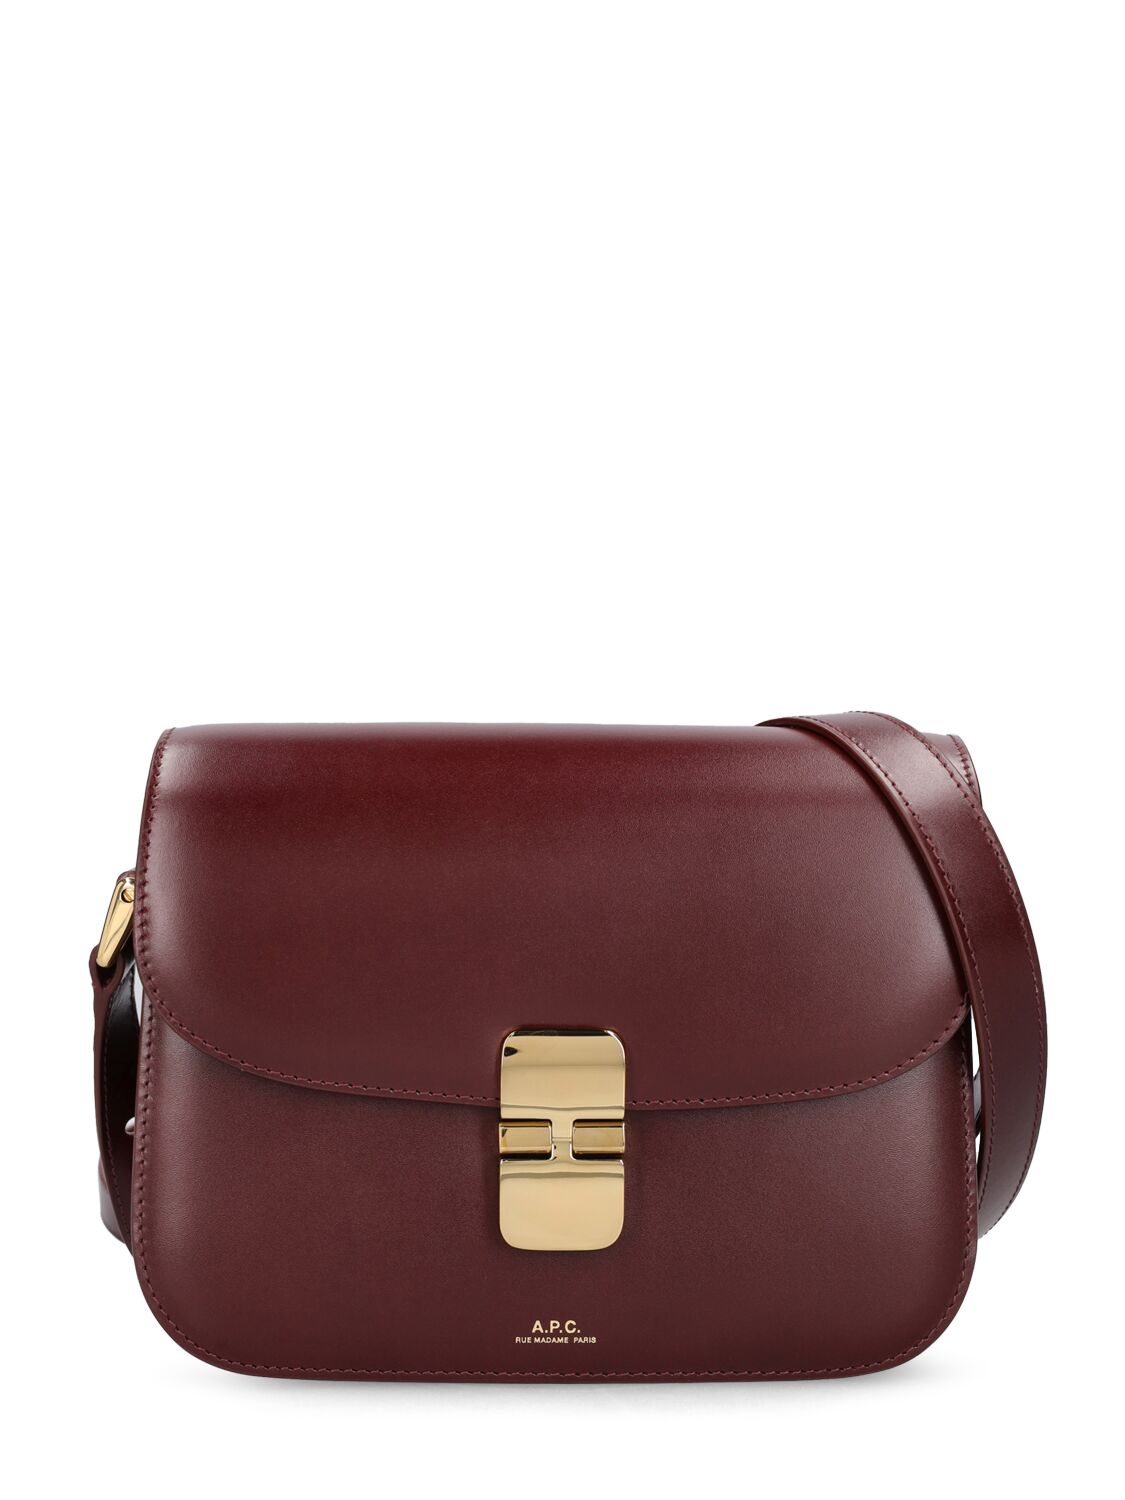 Apc Small Grace Leather Shoulder Bag In Vino